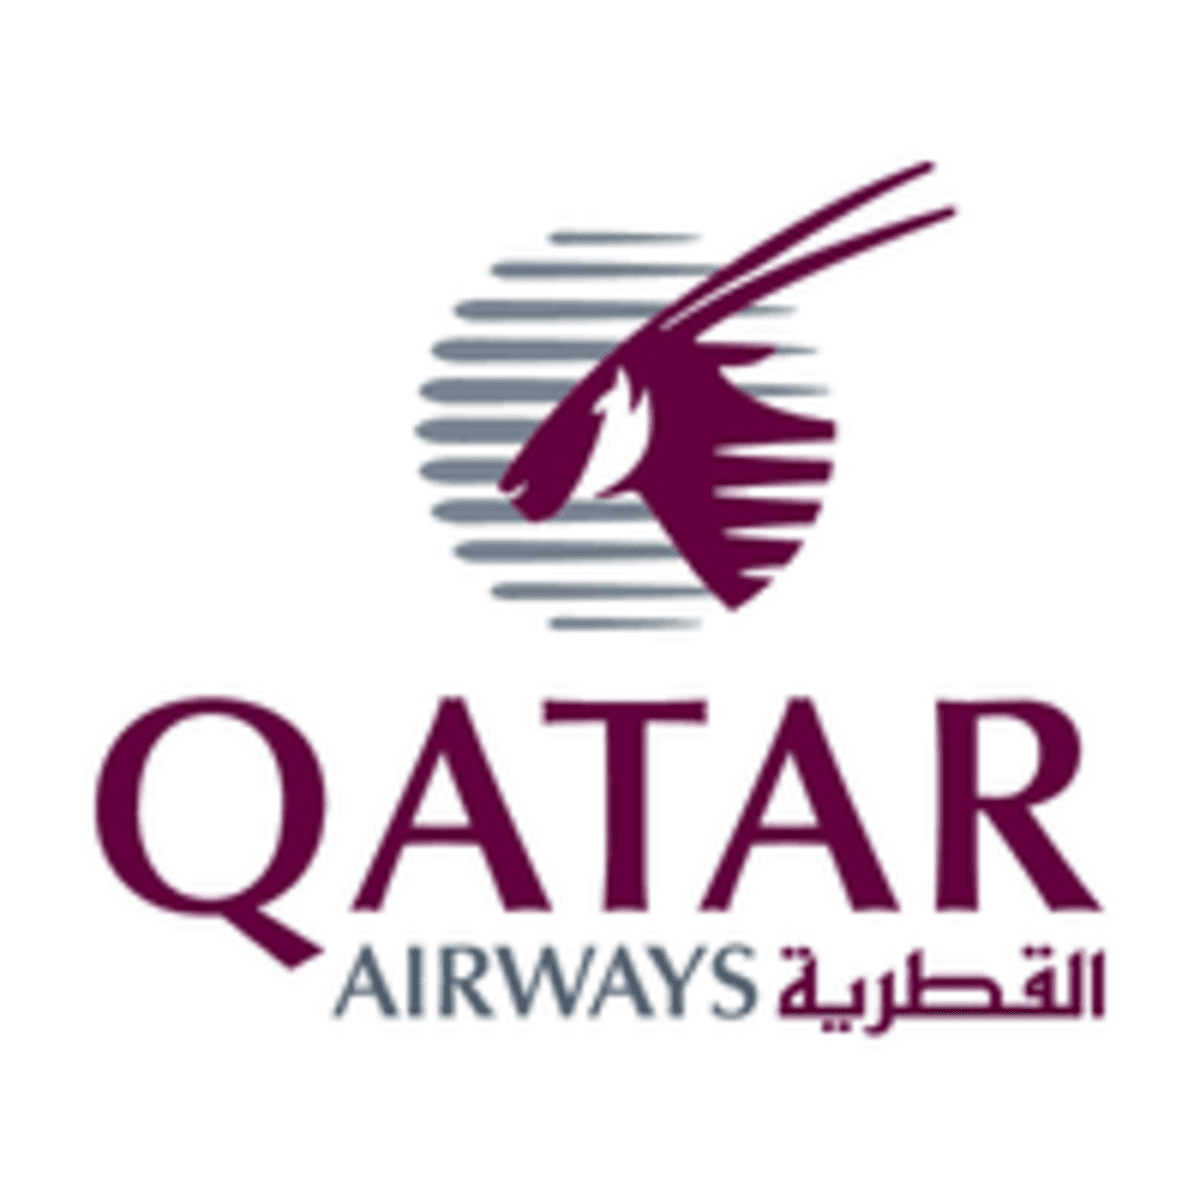 Job Vacancy DSM at Qatar Airways Tanzania 2022, Qatar airways tanzania job vacancies, Qatar Airways Cabin Crew Recruitment 2022, Qatar Airways Careers, Qatar Airways Jobs in Tanzania